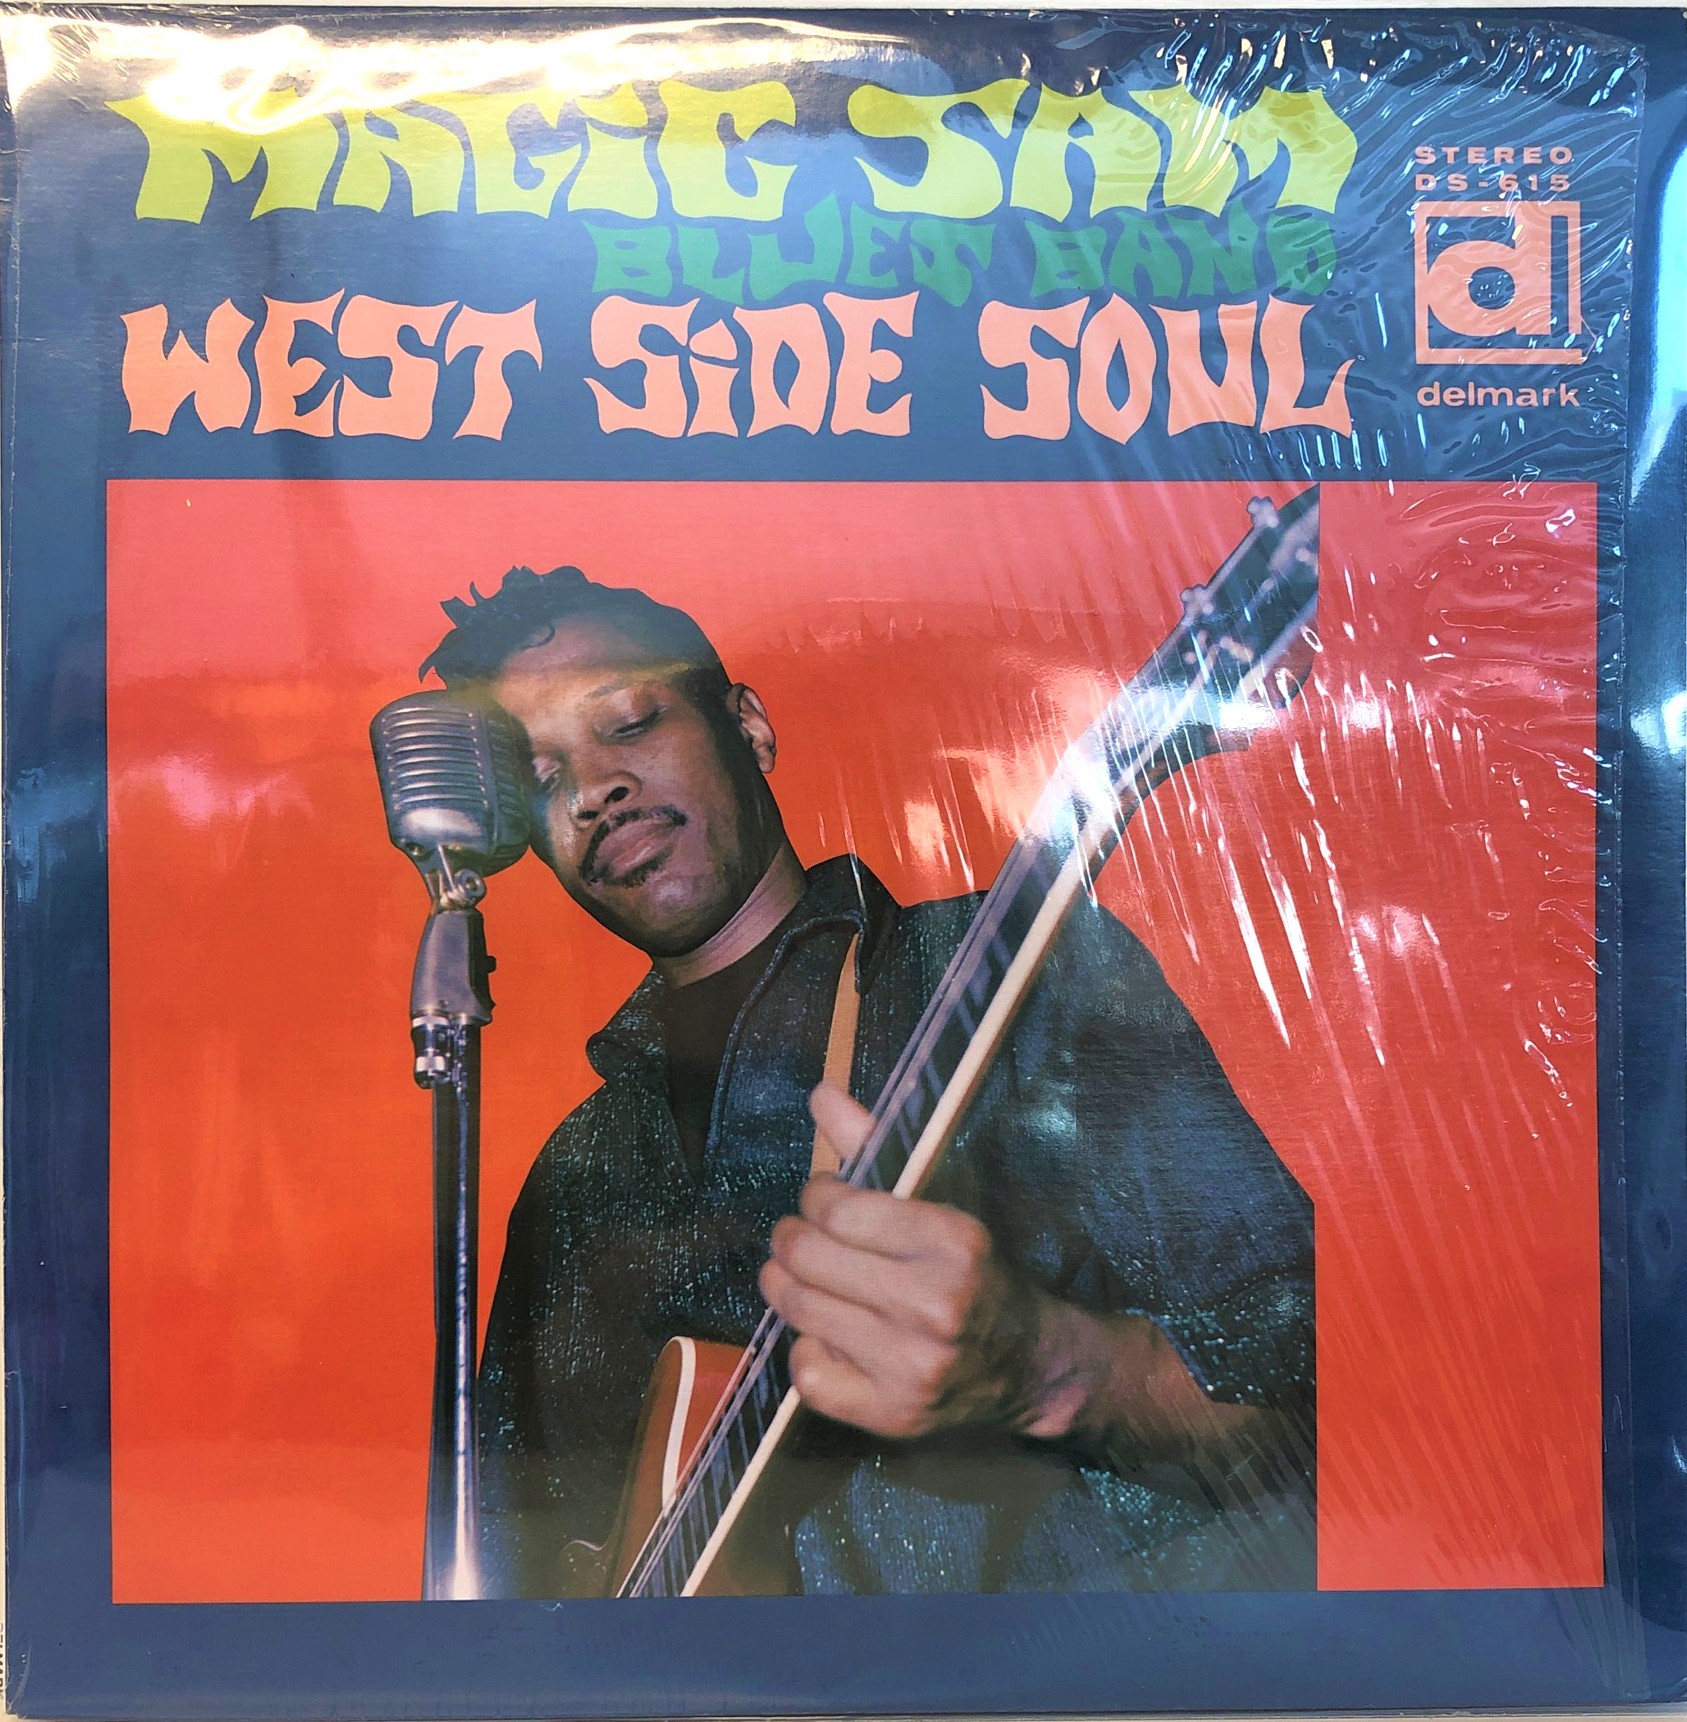 Magic Sam Blues Band ‎– West Side Soul 中古レコード通販・買取のアカル・レコーズ